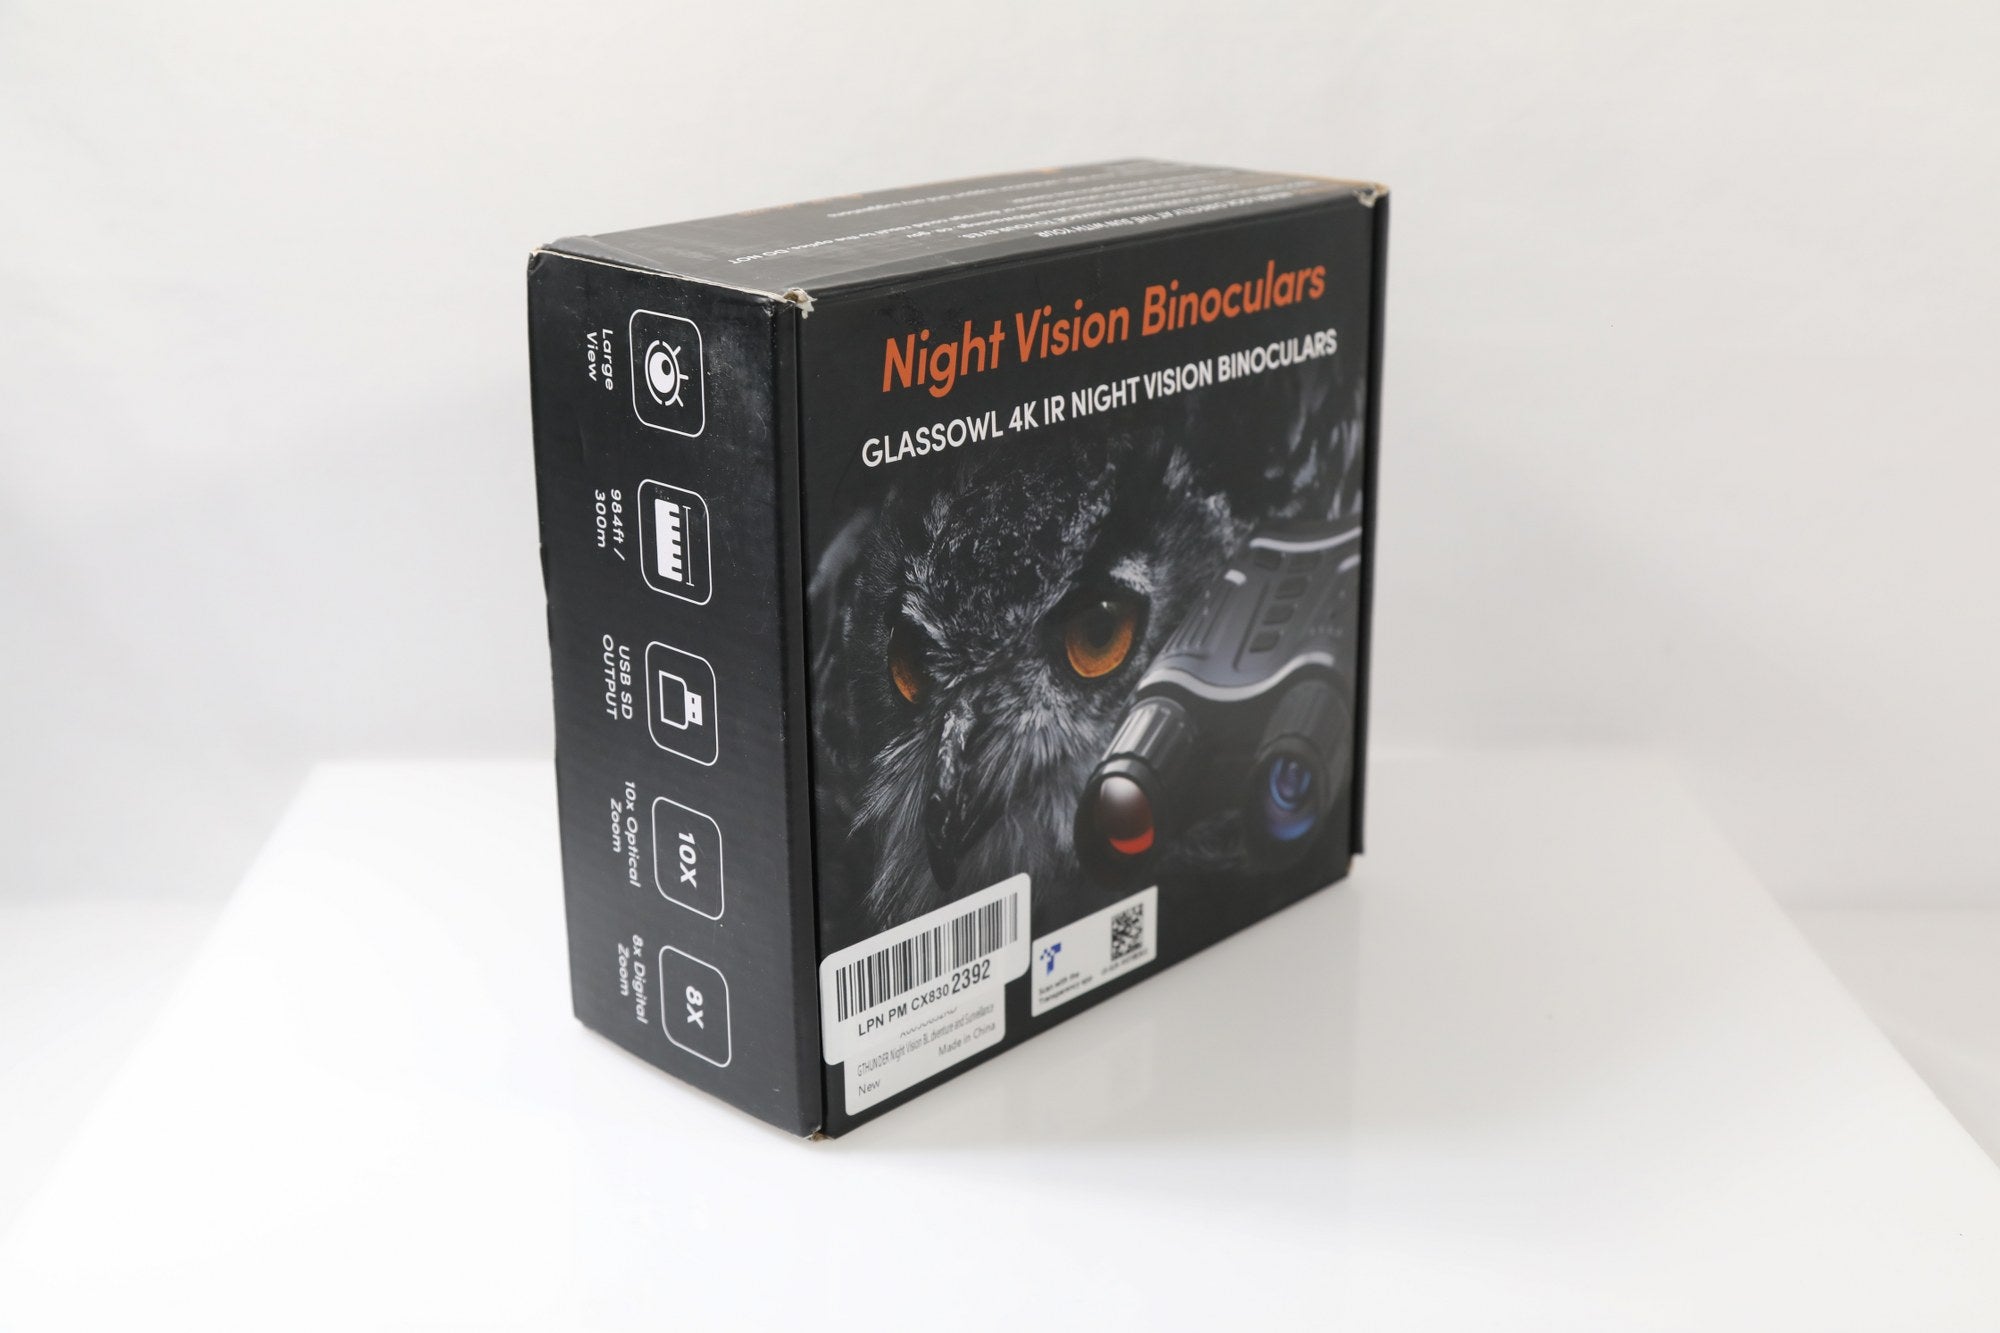 GlassOwl 4K IR Night Vision Binoculars - DOKAN